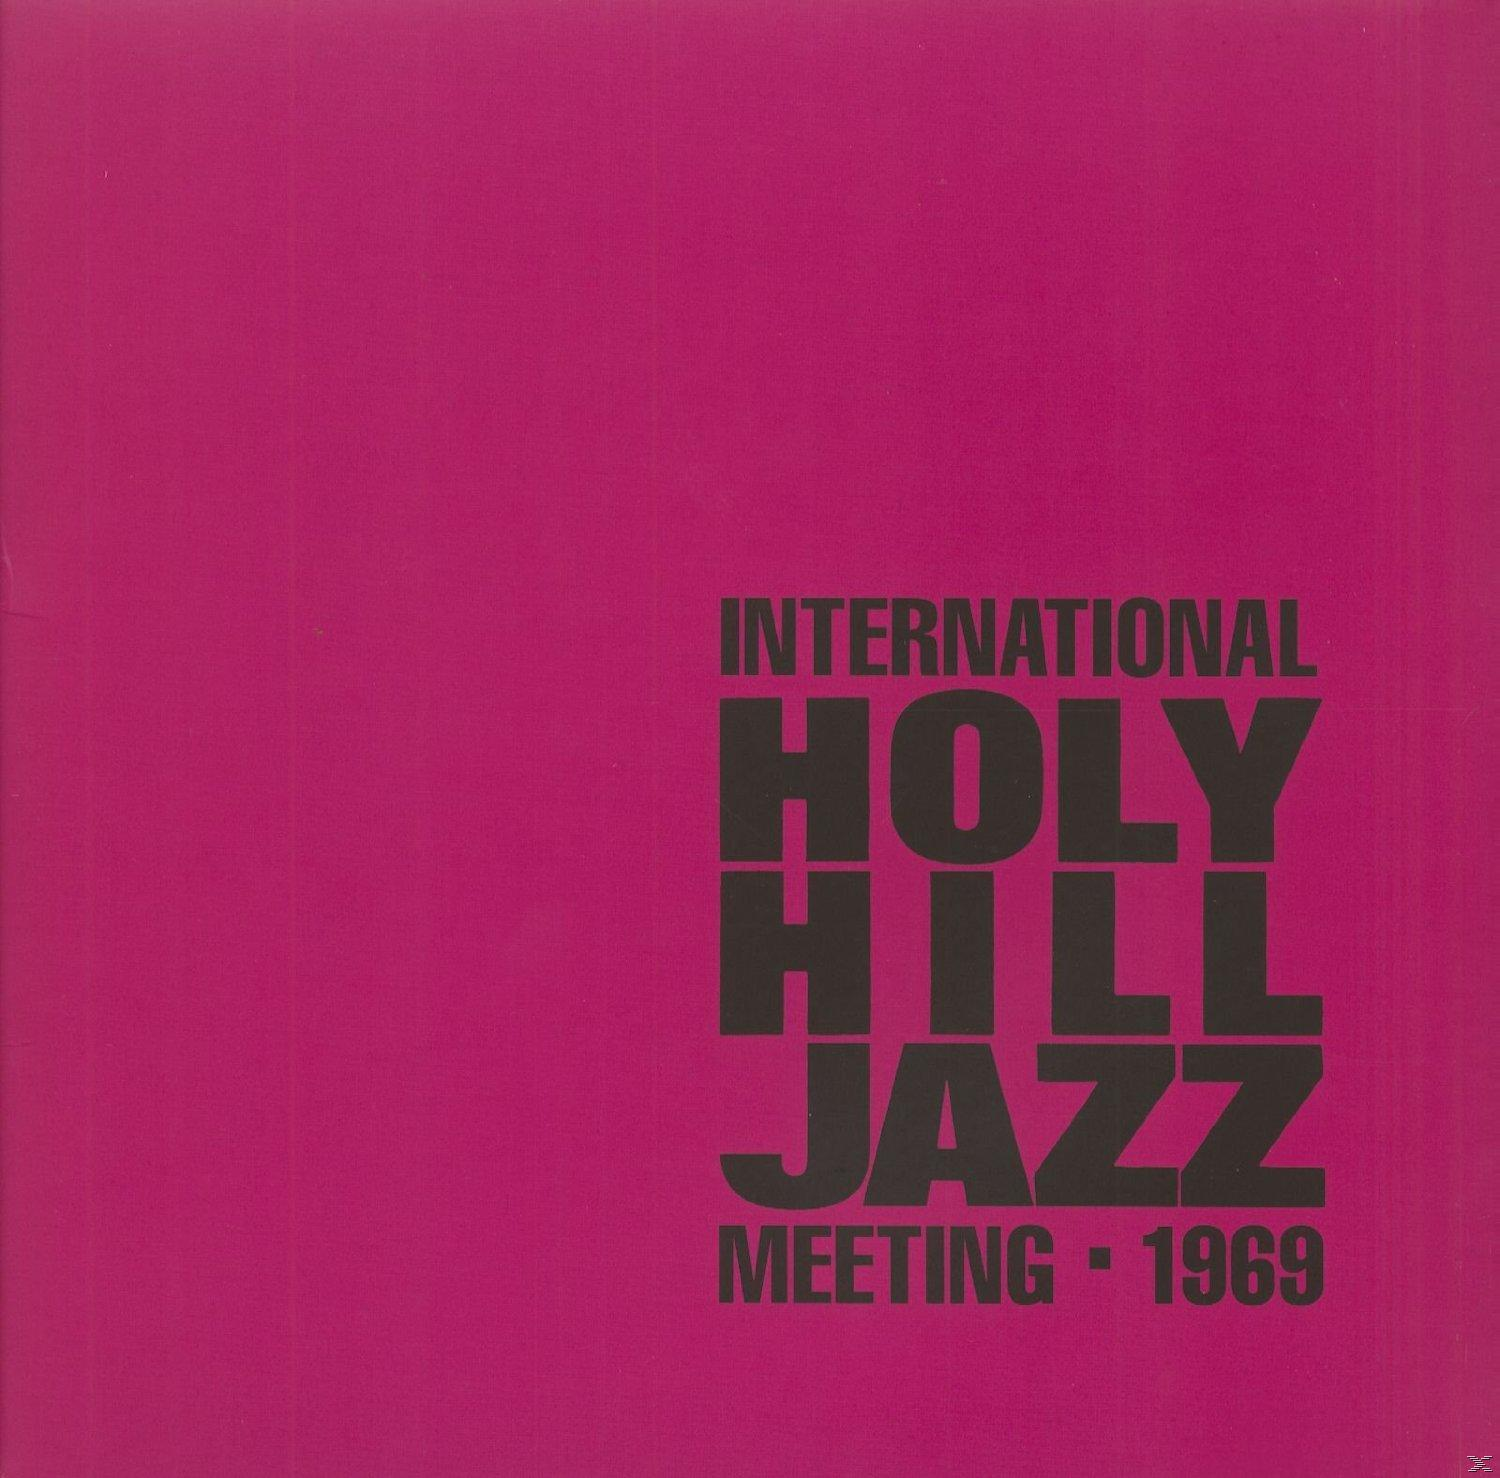 Hill Holy Jazz VARIOUS (2-Lp) Meeting-1969 (Vinyl) - International -